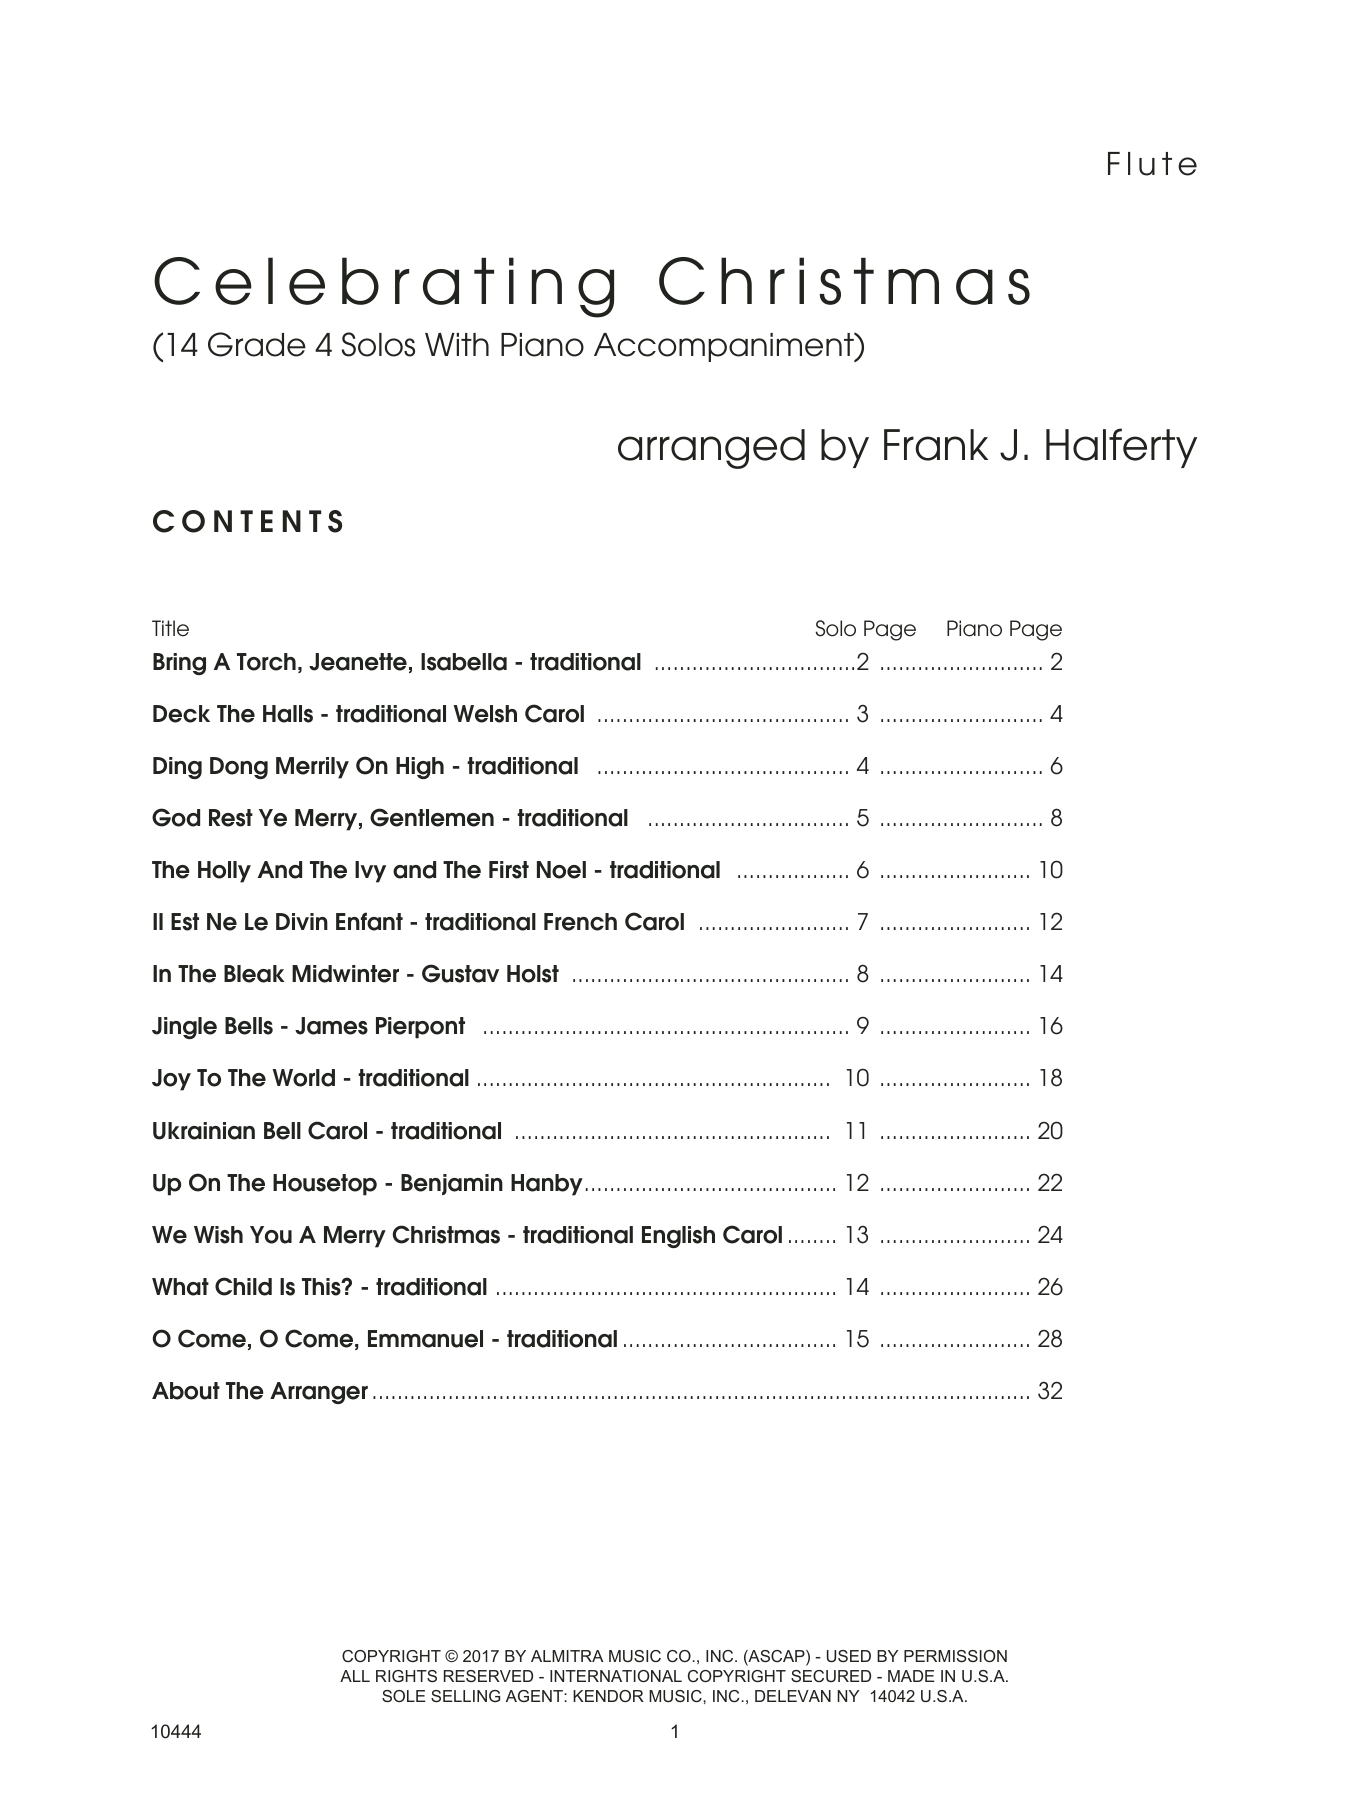 Celebrating Christmas (14 Grade 4 Solos With Piano Accompaniment) - Flute (Woodwind Solo) von Frank J. Halferty